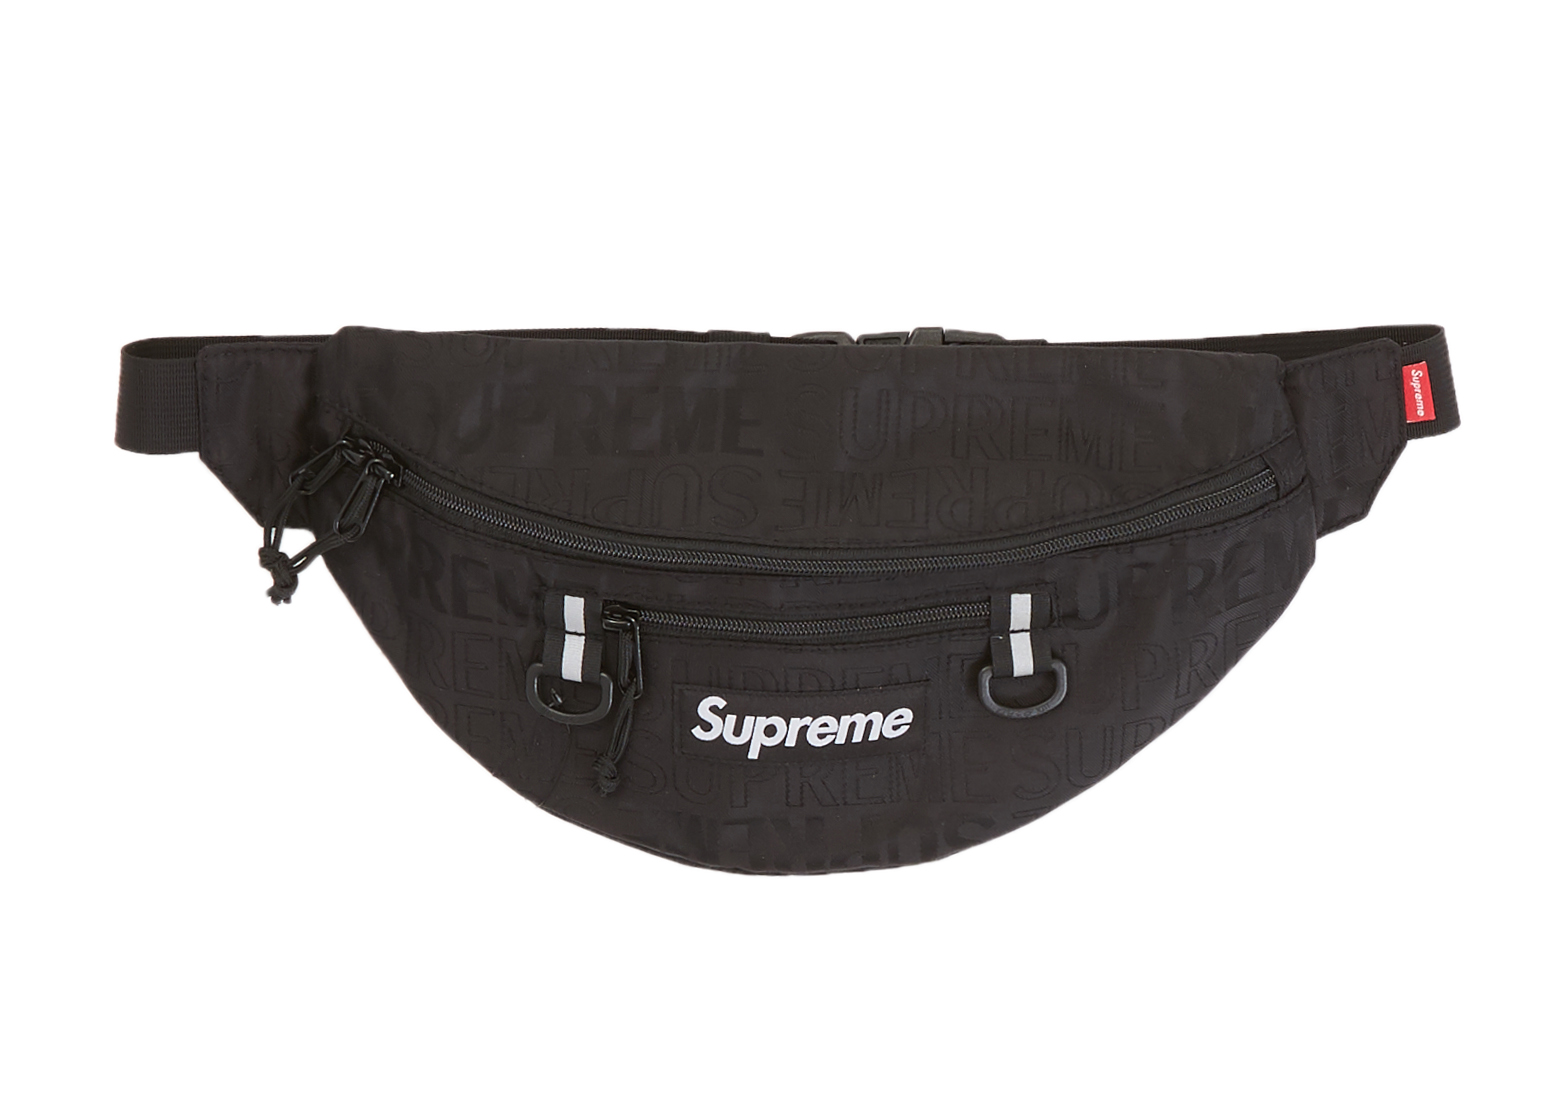 supreme waist bag canada